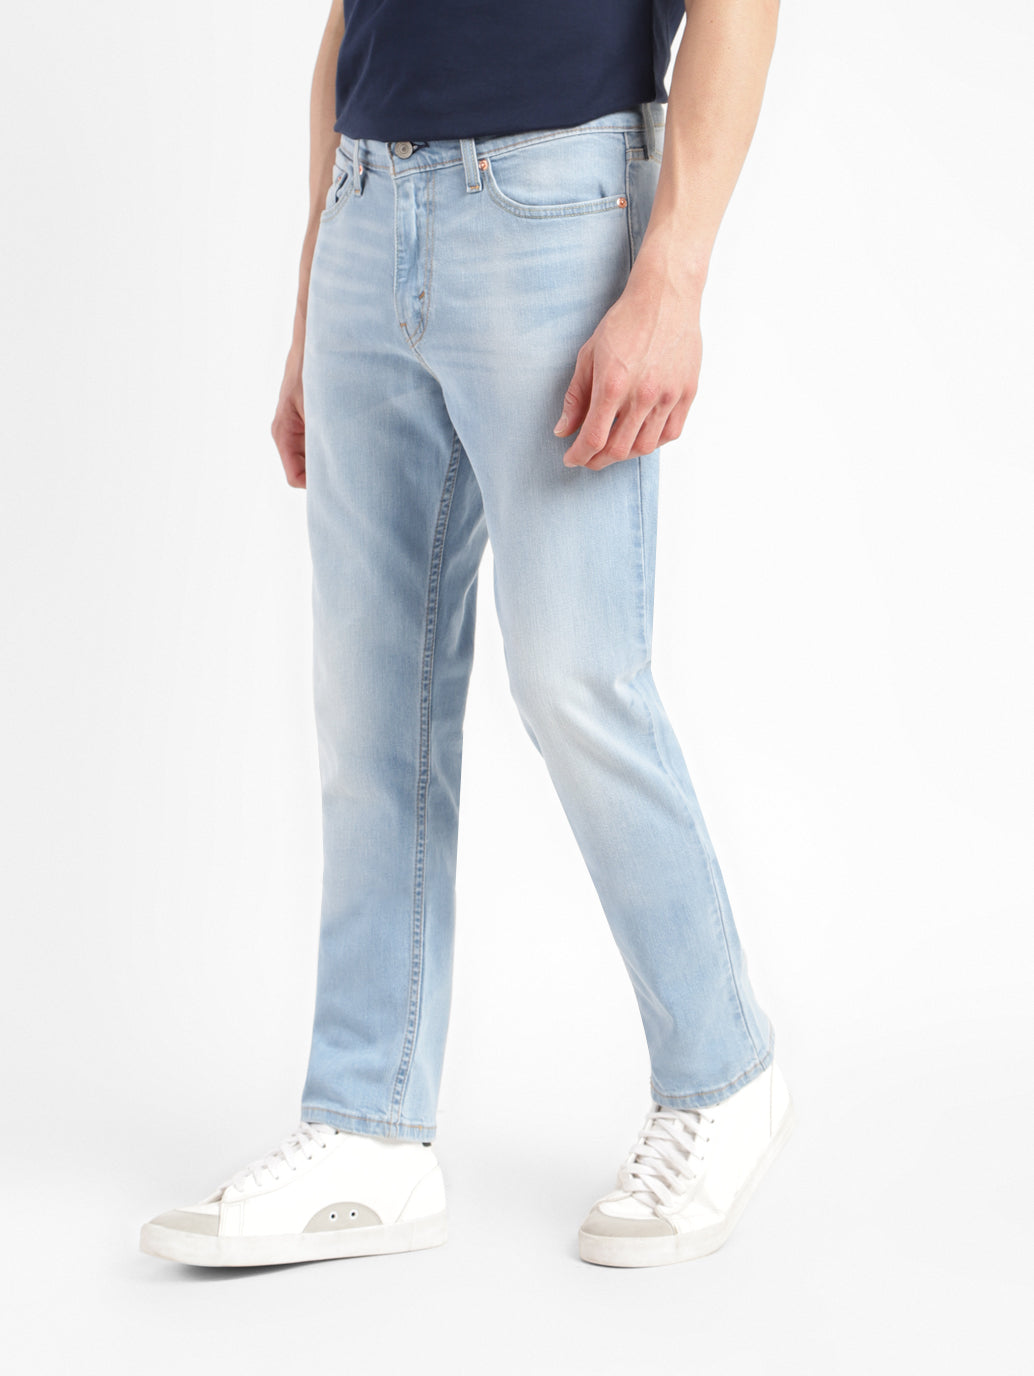 Men's 511 Light Blue Slim Fit Jeans